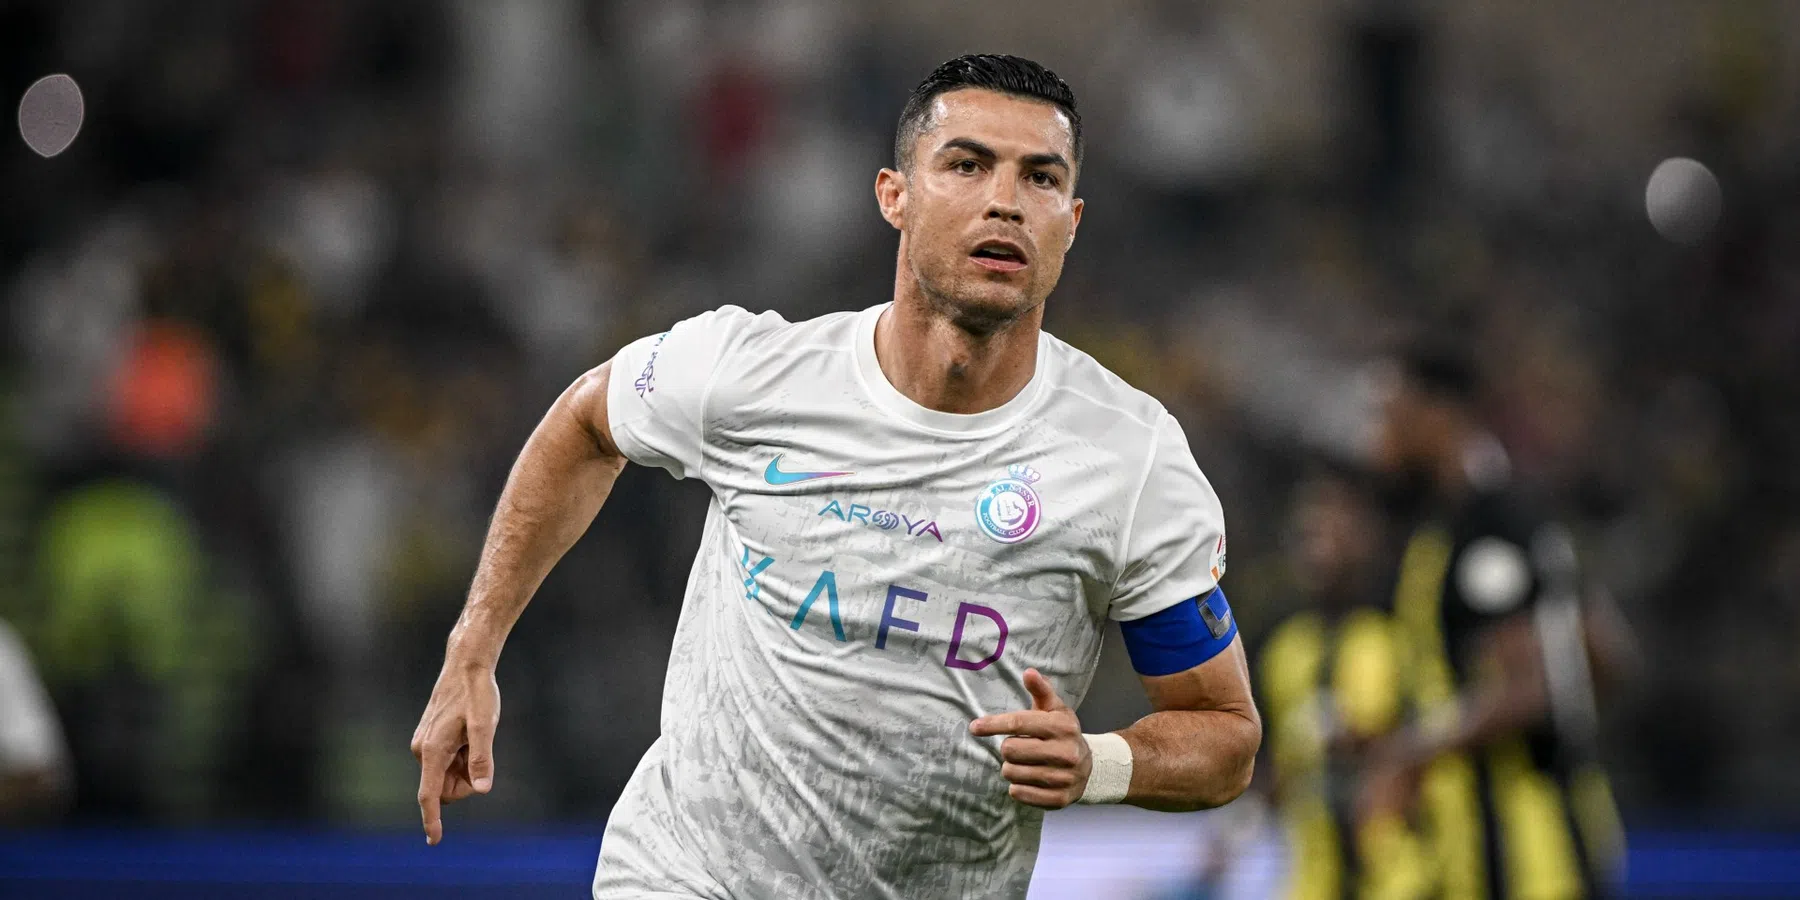 Ronaldo nuchter na bereiken 1000 duels in clubverband